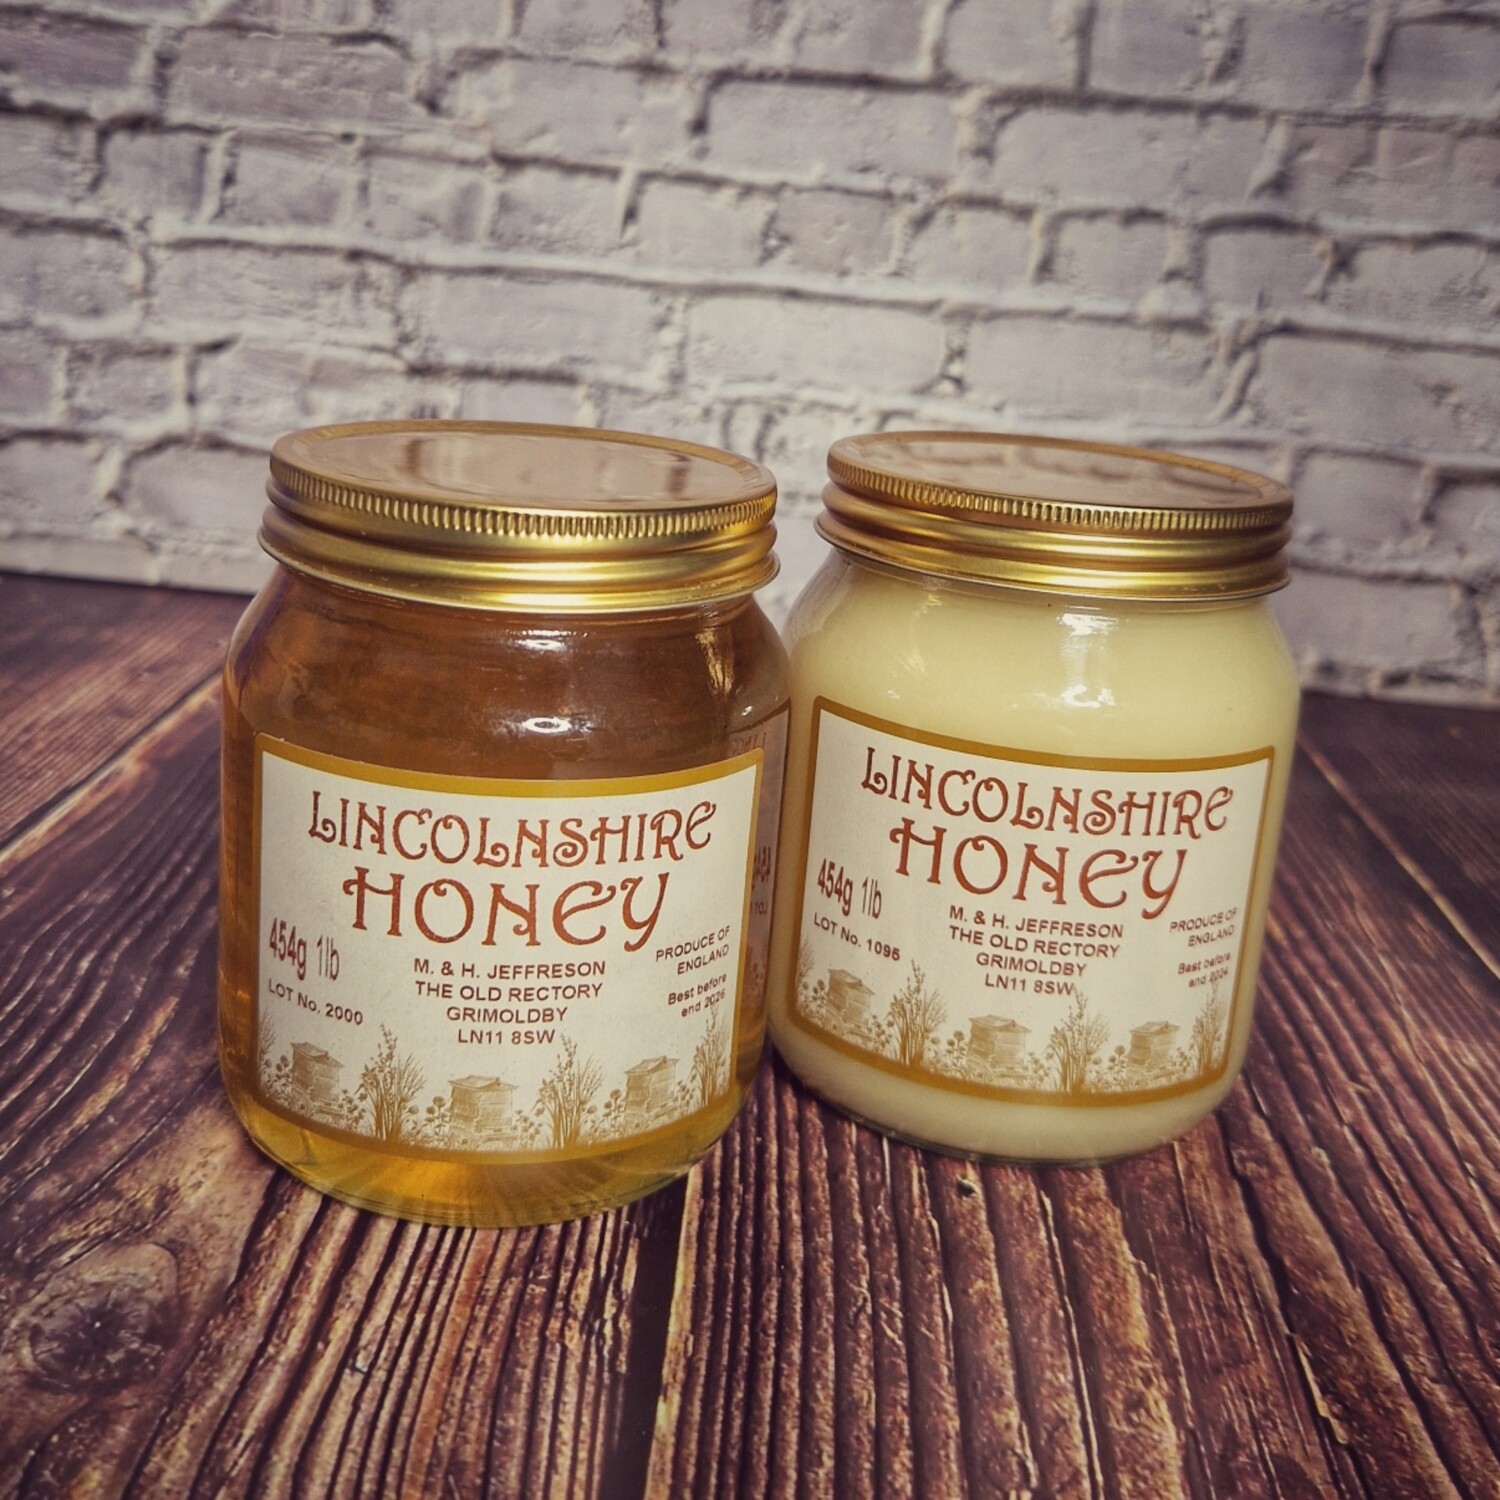 Preorder Lincolnshire Honey